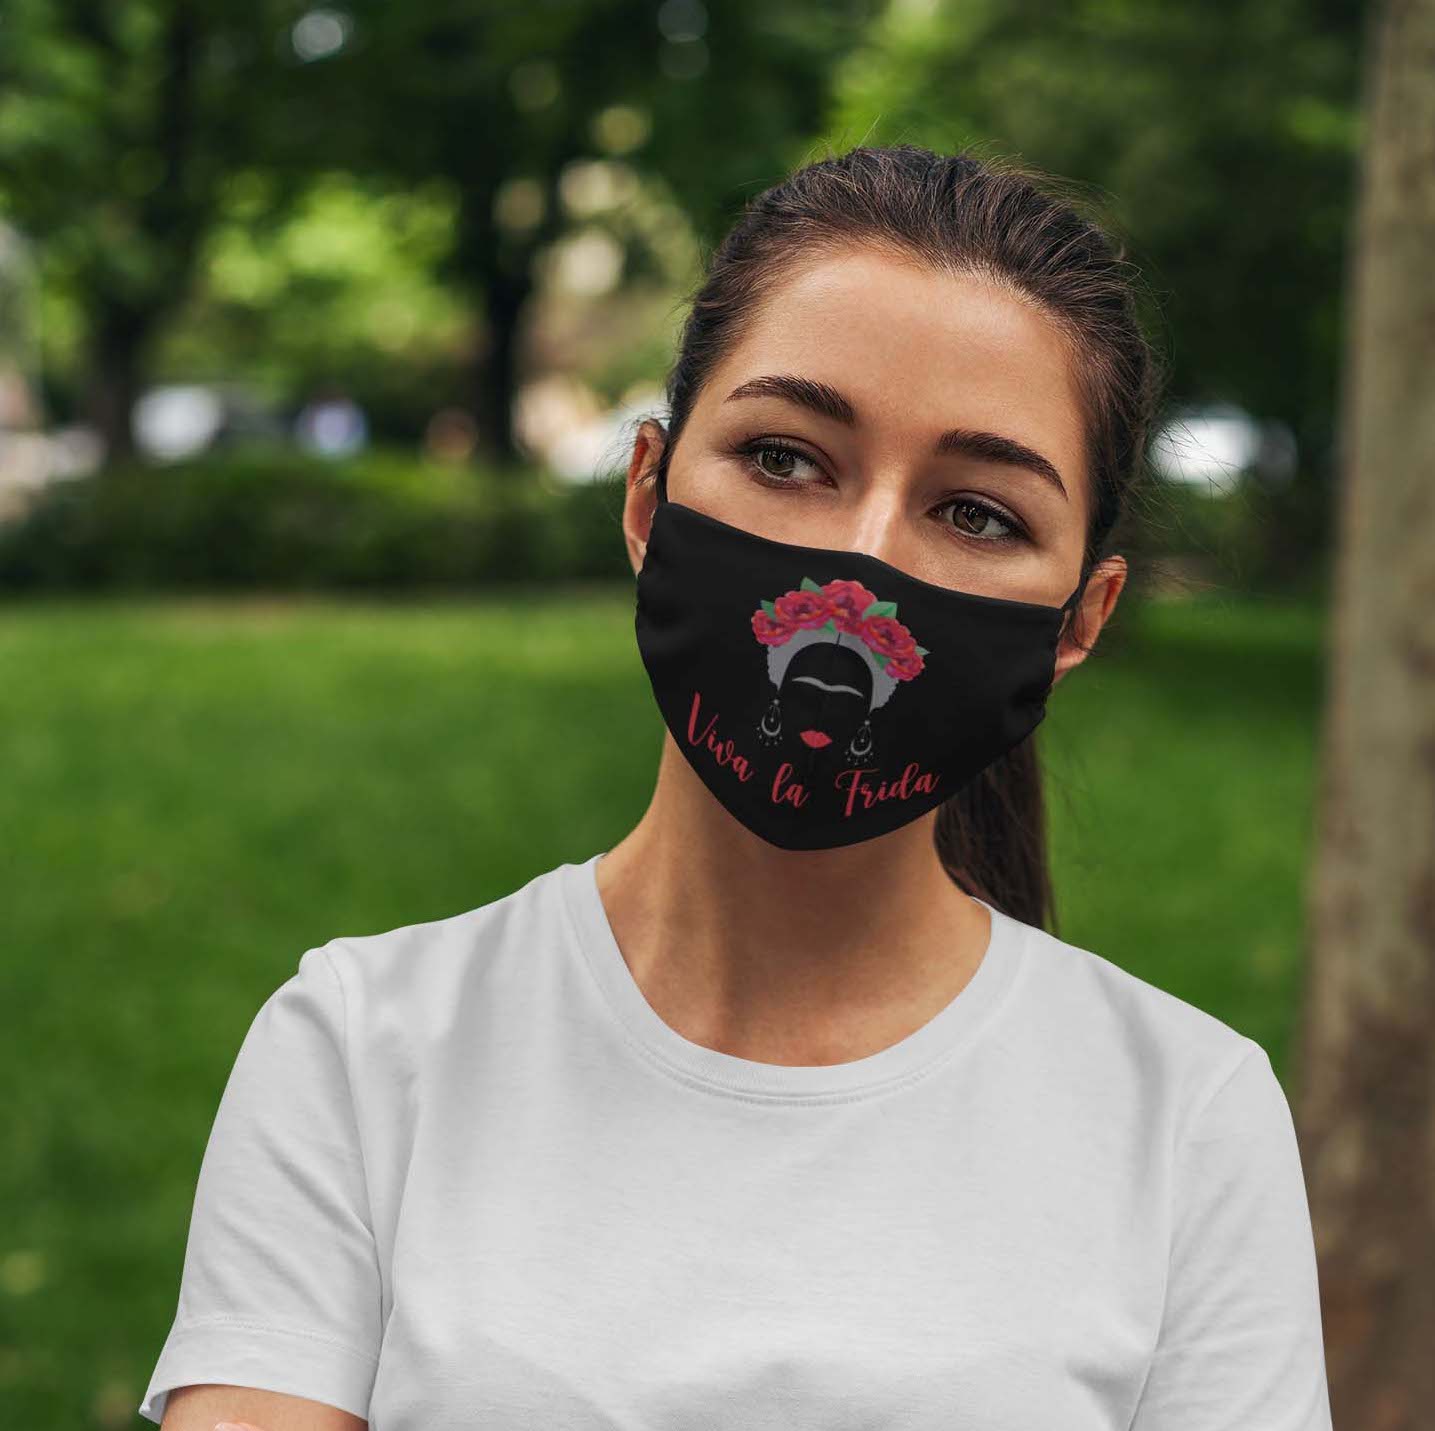 Viva la frida kahlo feminist anti pollution face mask 1